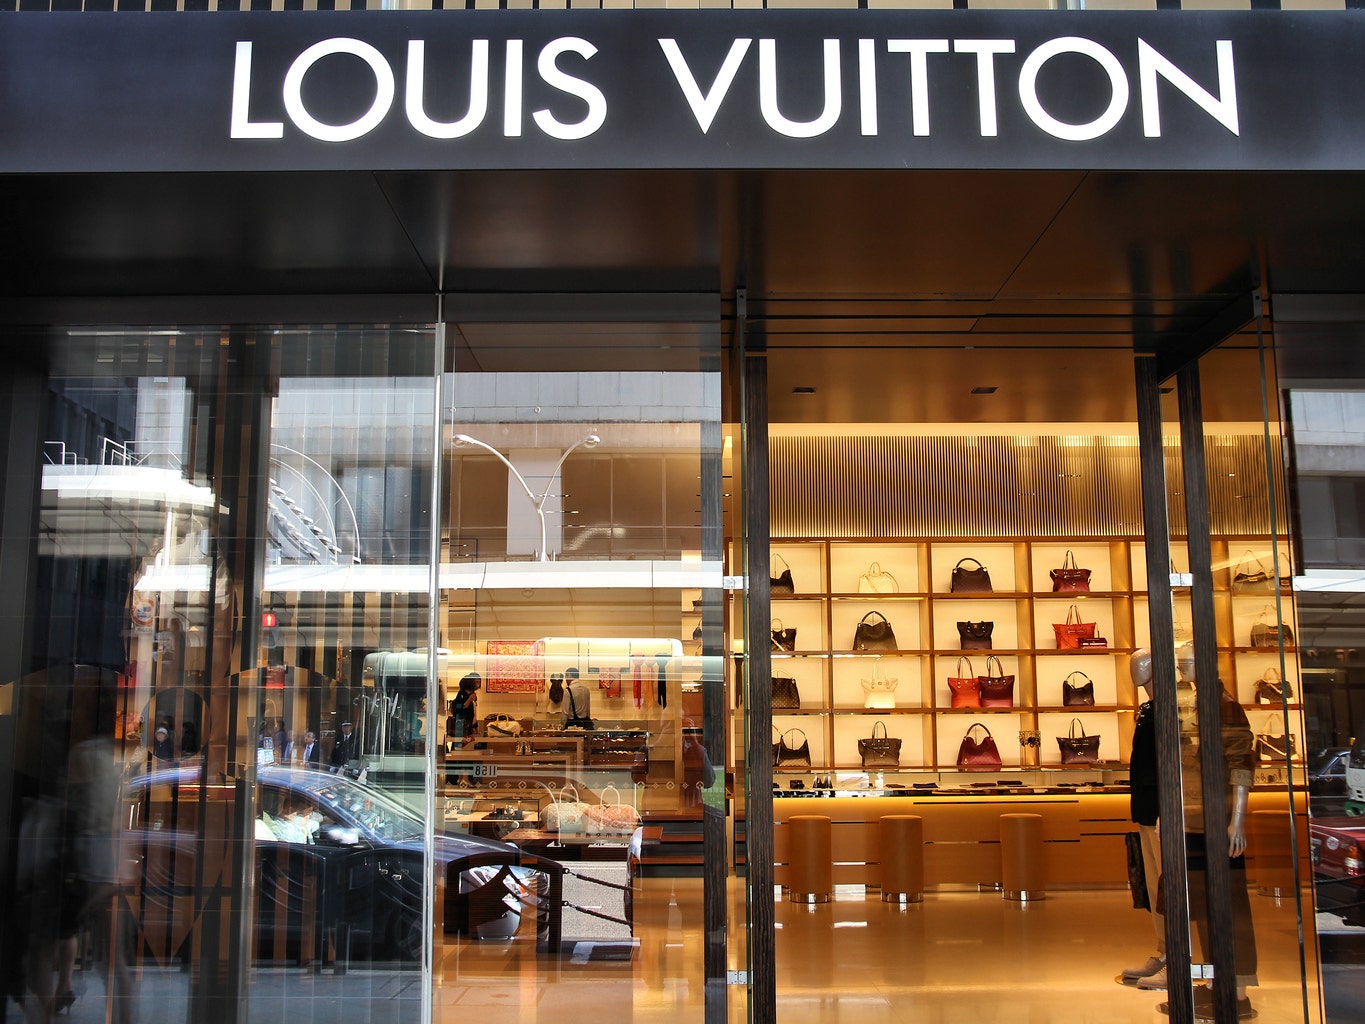 Inside Louis Vuitton Moet Hennessey London Offices